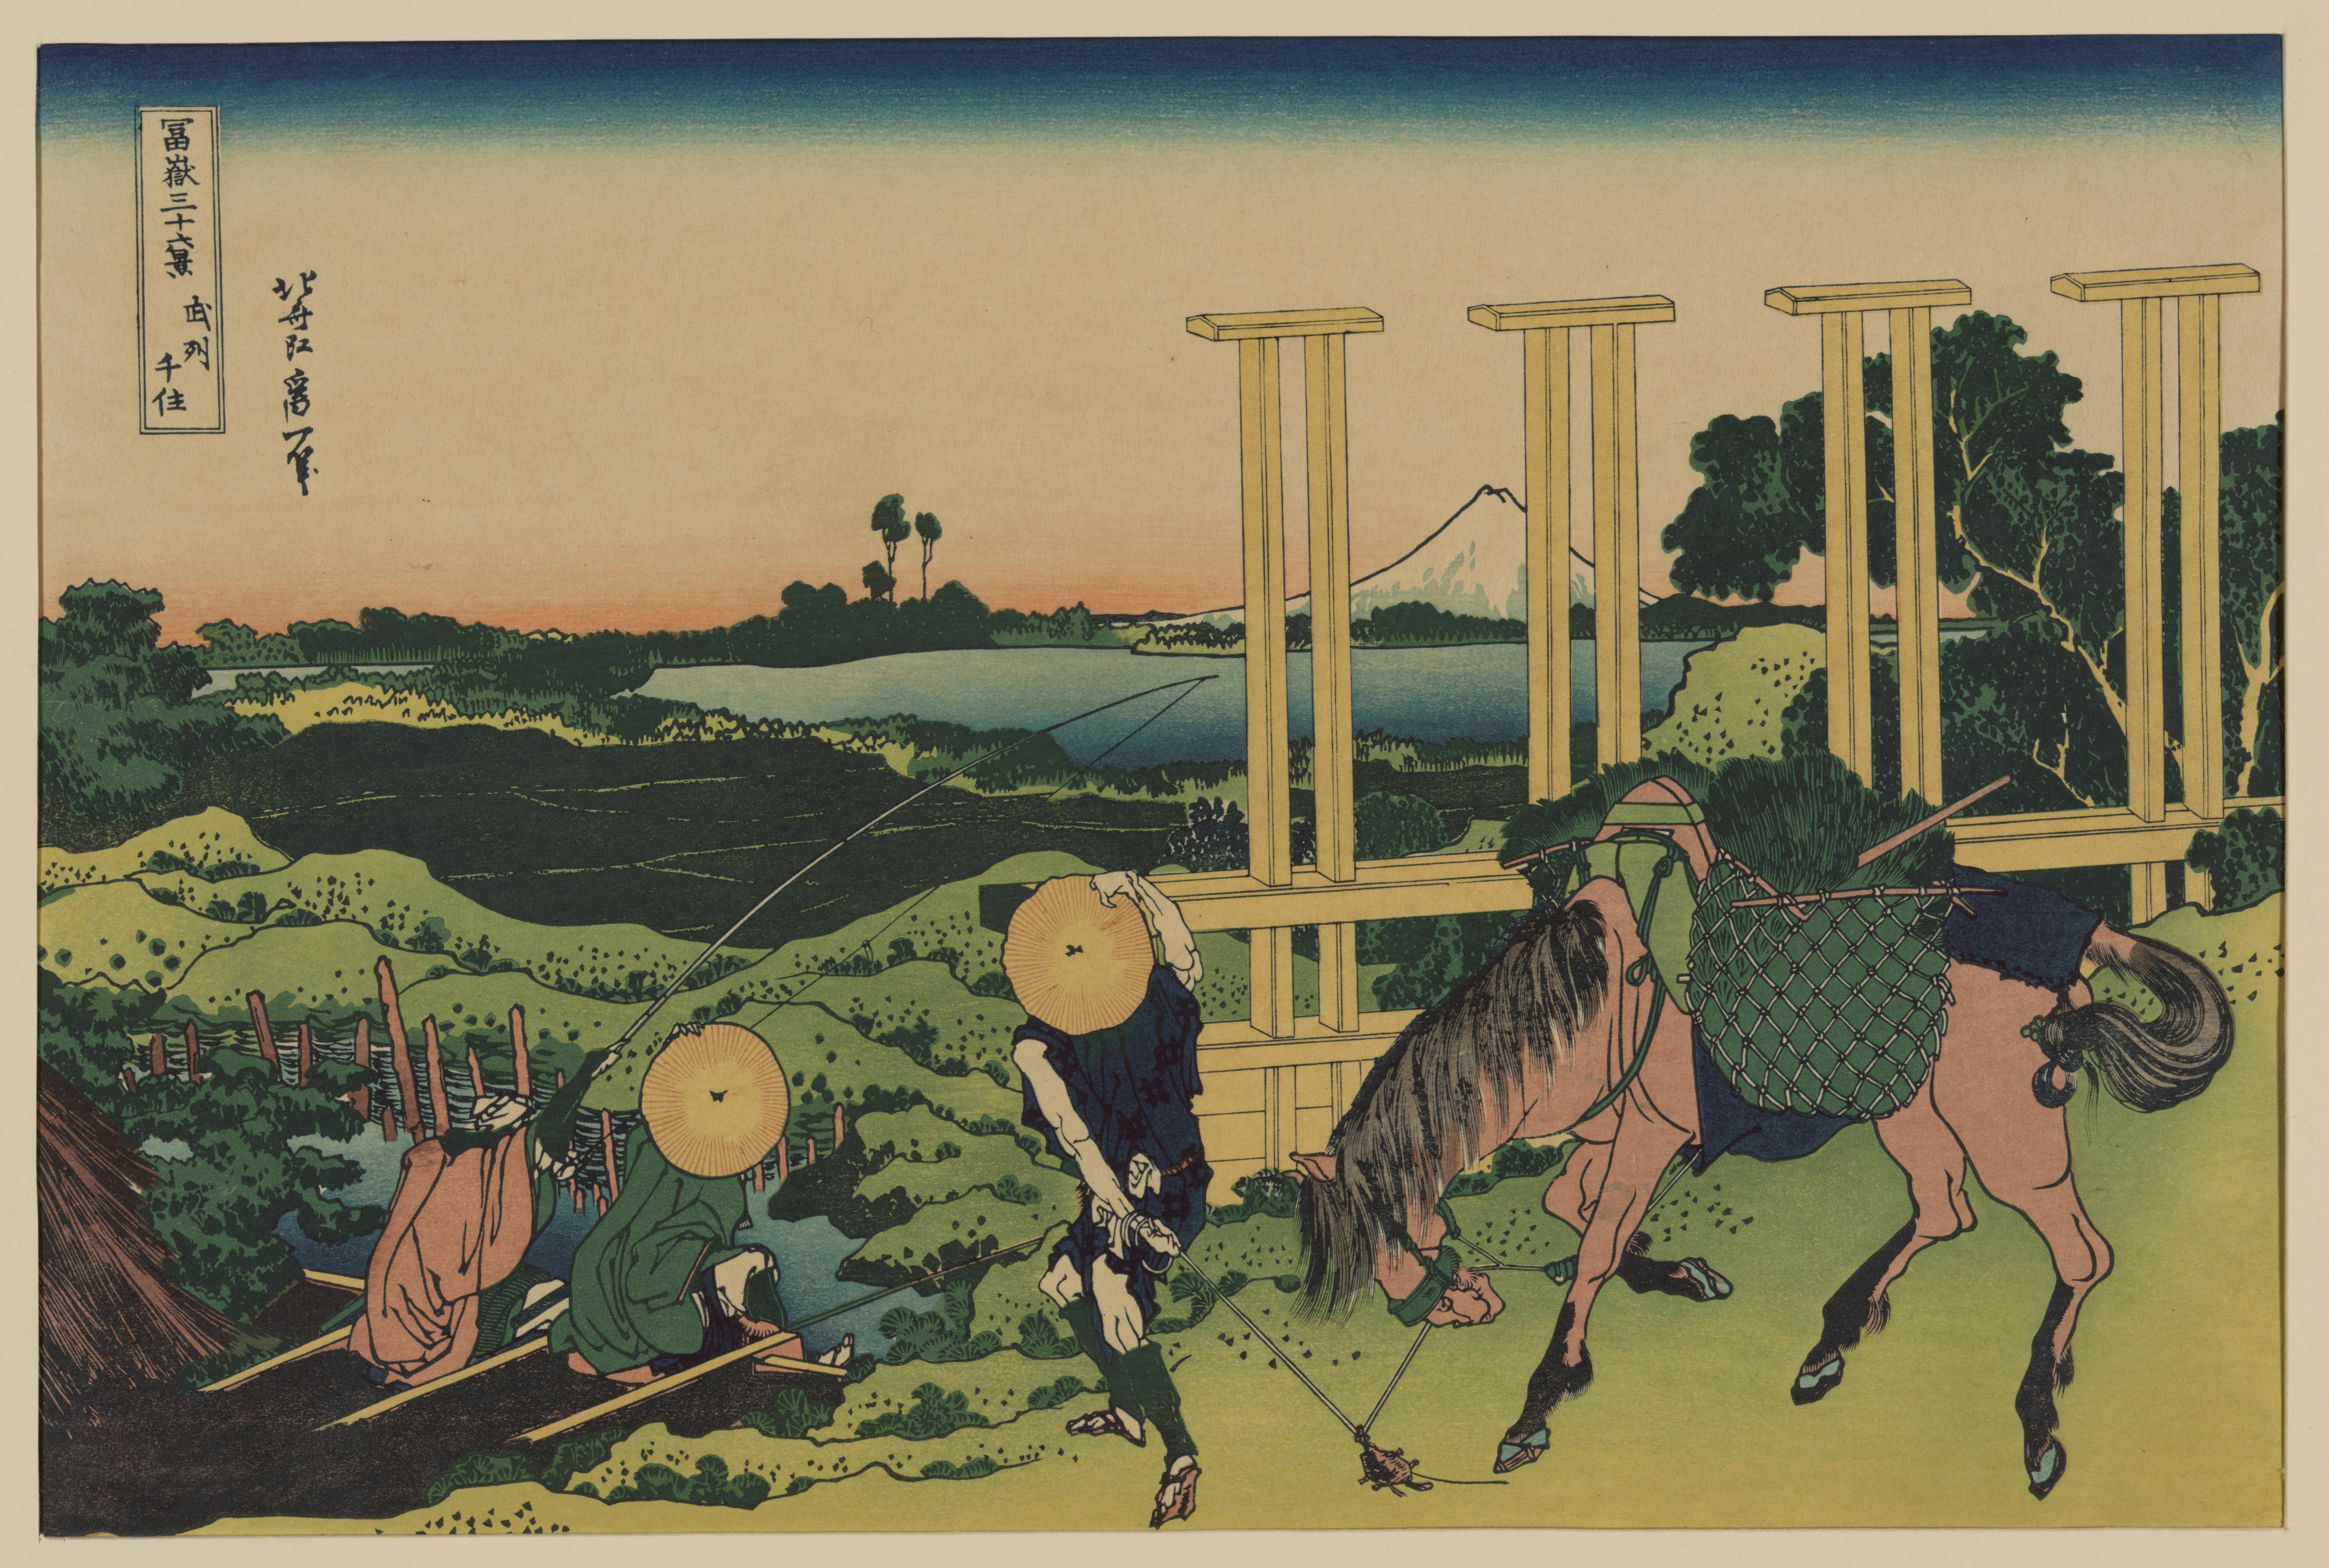 Katsushika Hokusai. Senju in Musashi Province, from the series Thirty-six Views of Mount Fuji